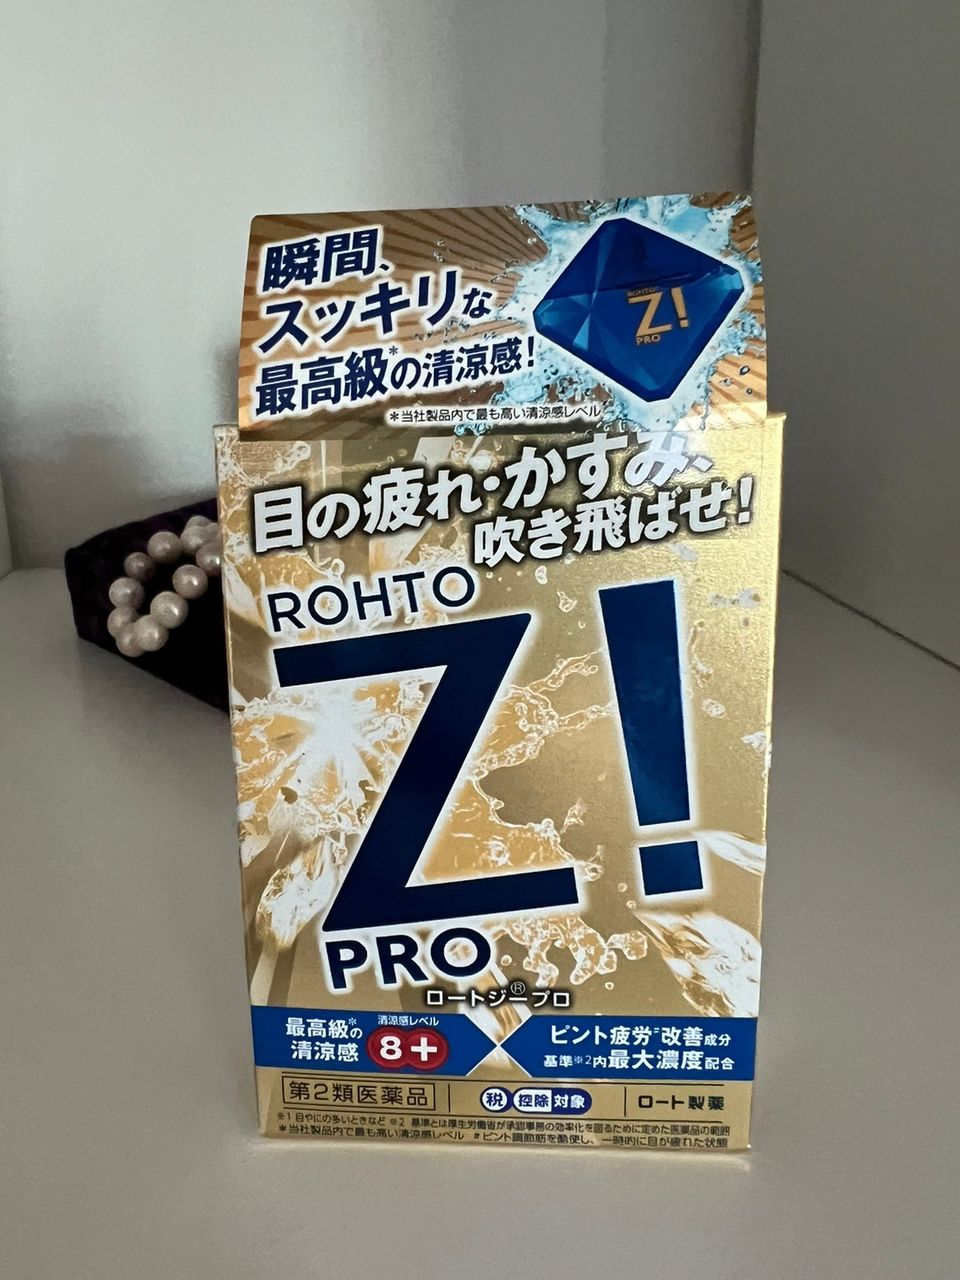 Rohto Z! Pro silmätipat 12ml made in Japan 🇯🇵  käyttämätön